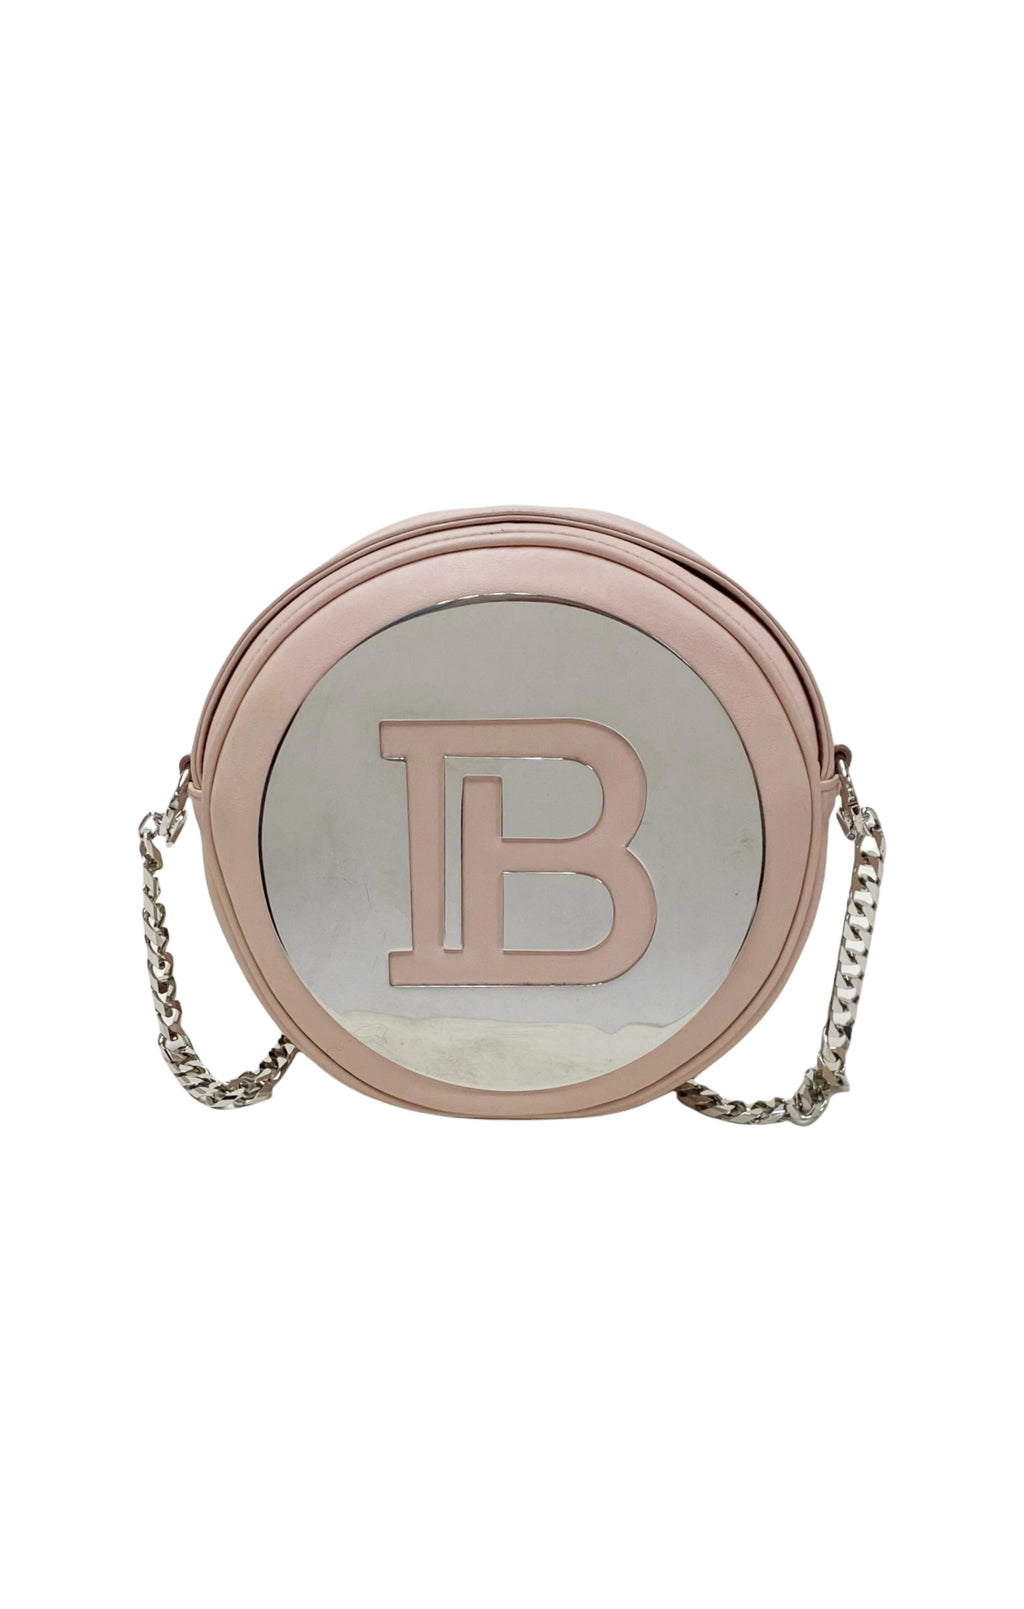 Hermès Birkin Handbag 398146